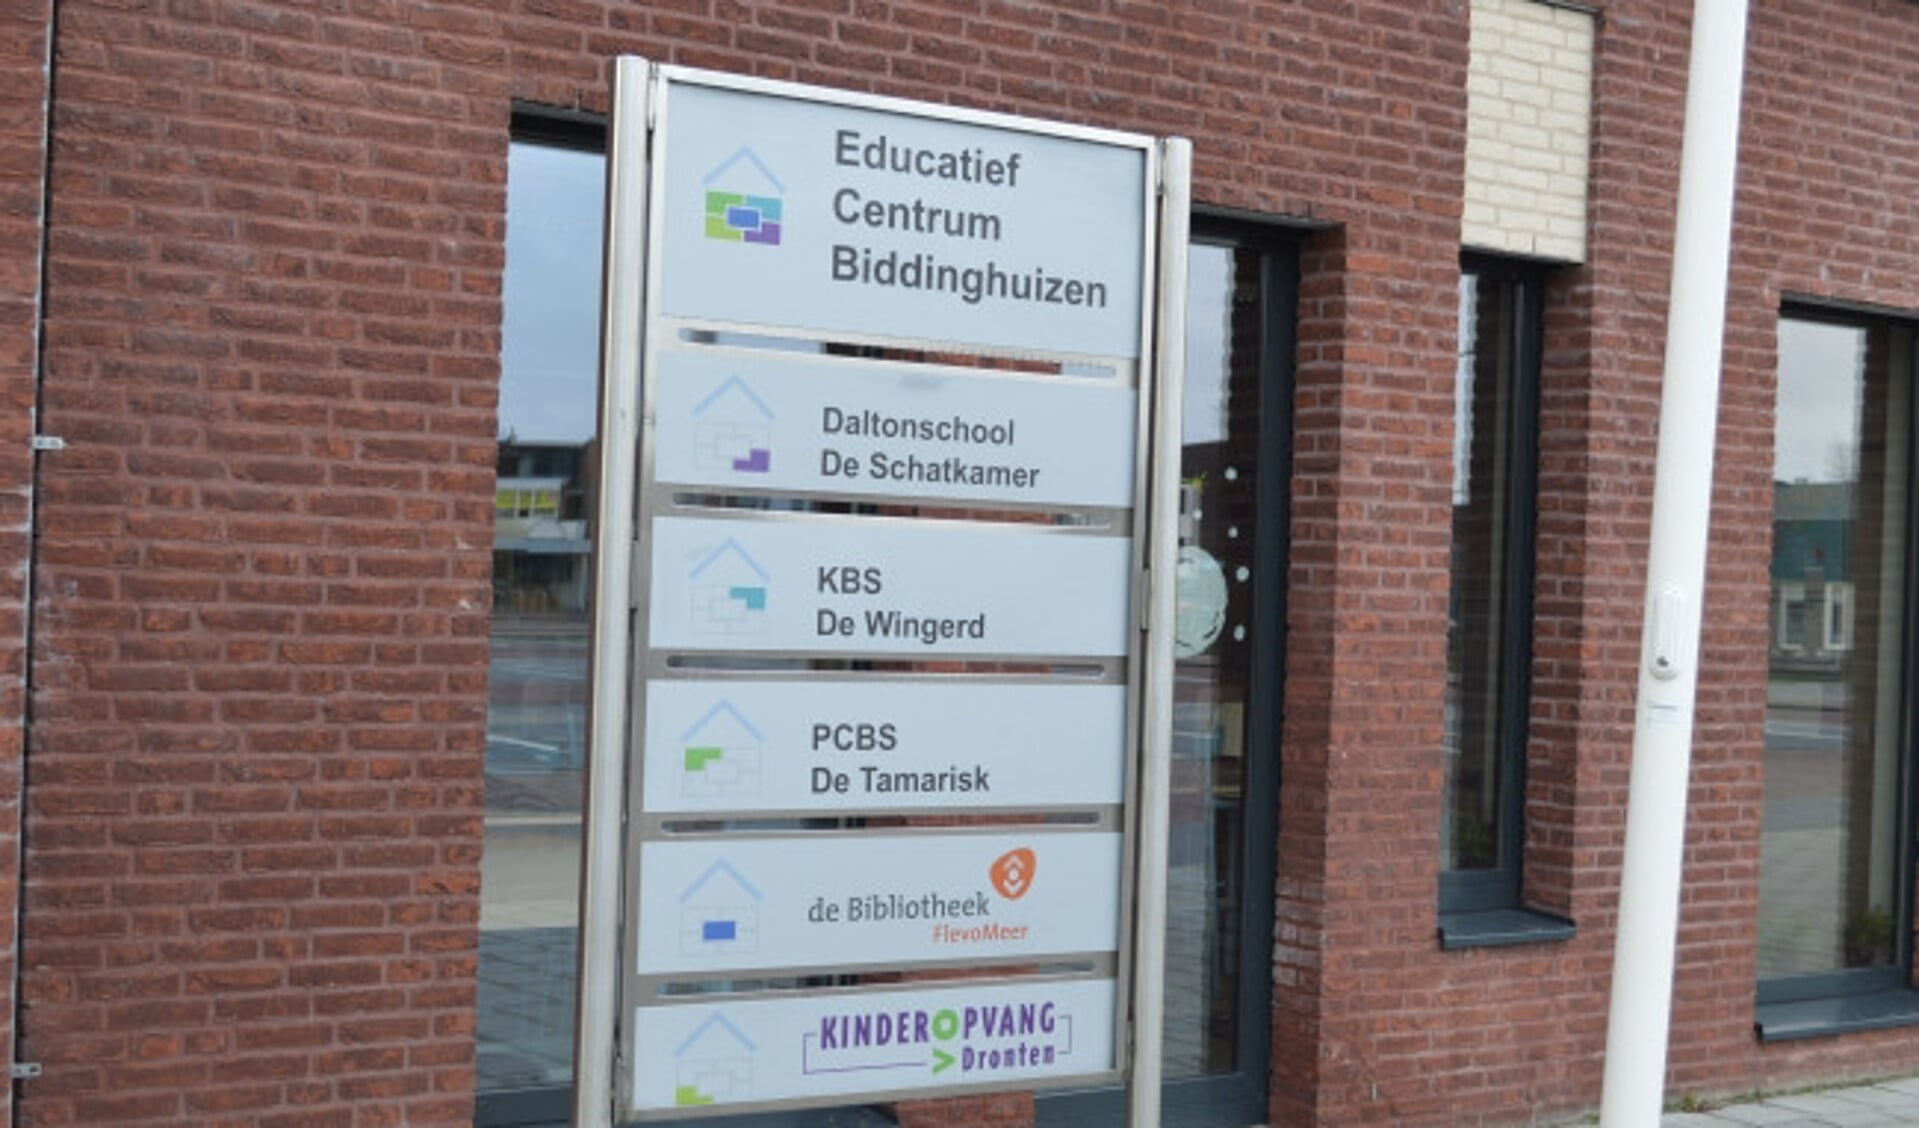  Educatief Centrum Biddinghuizen